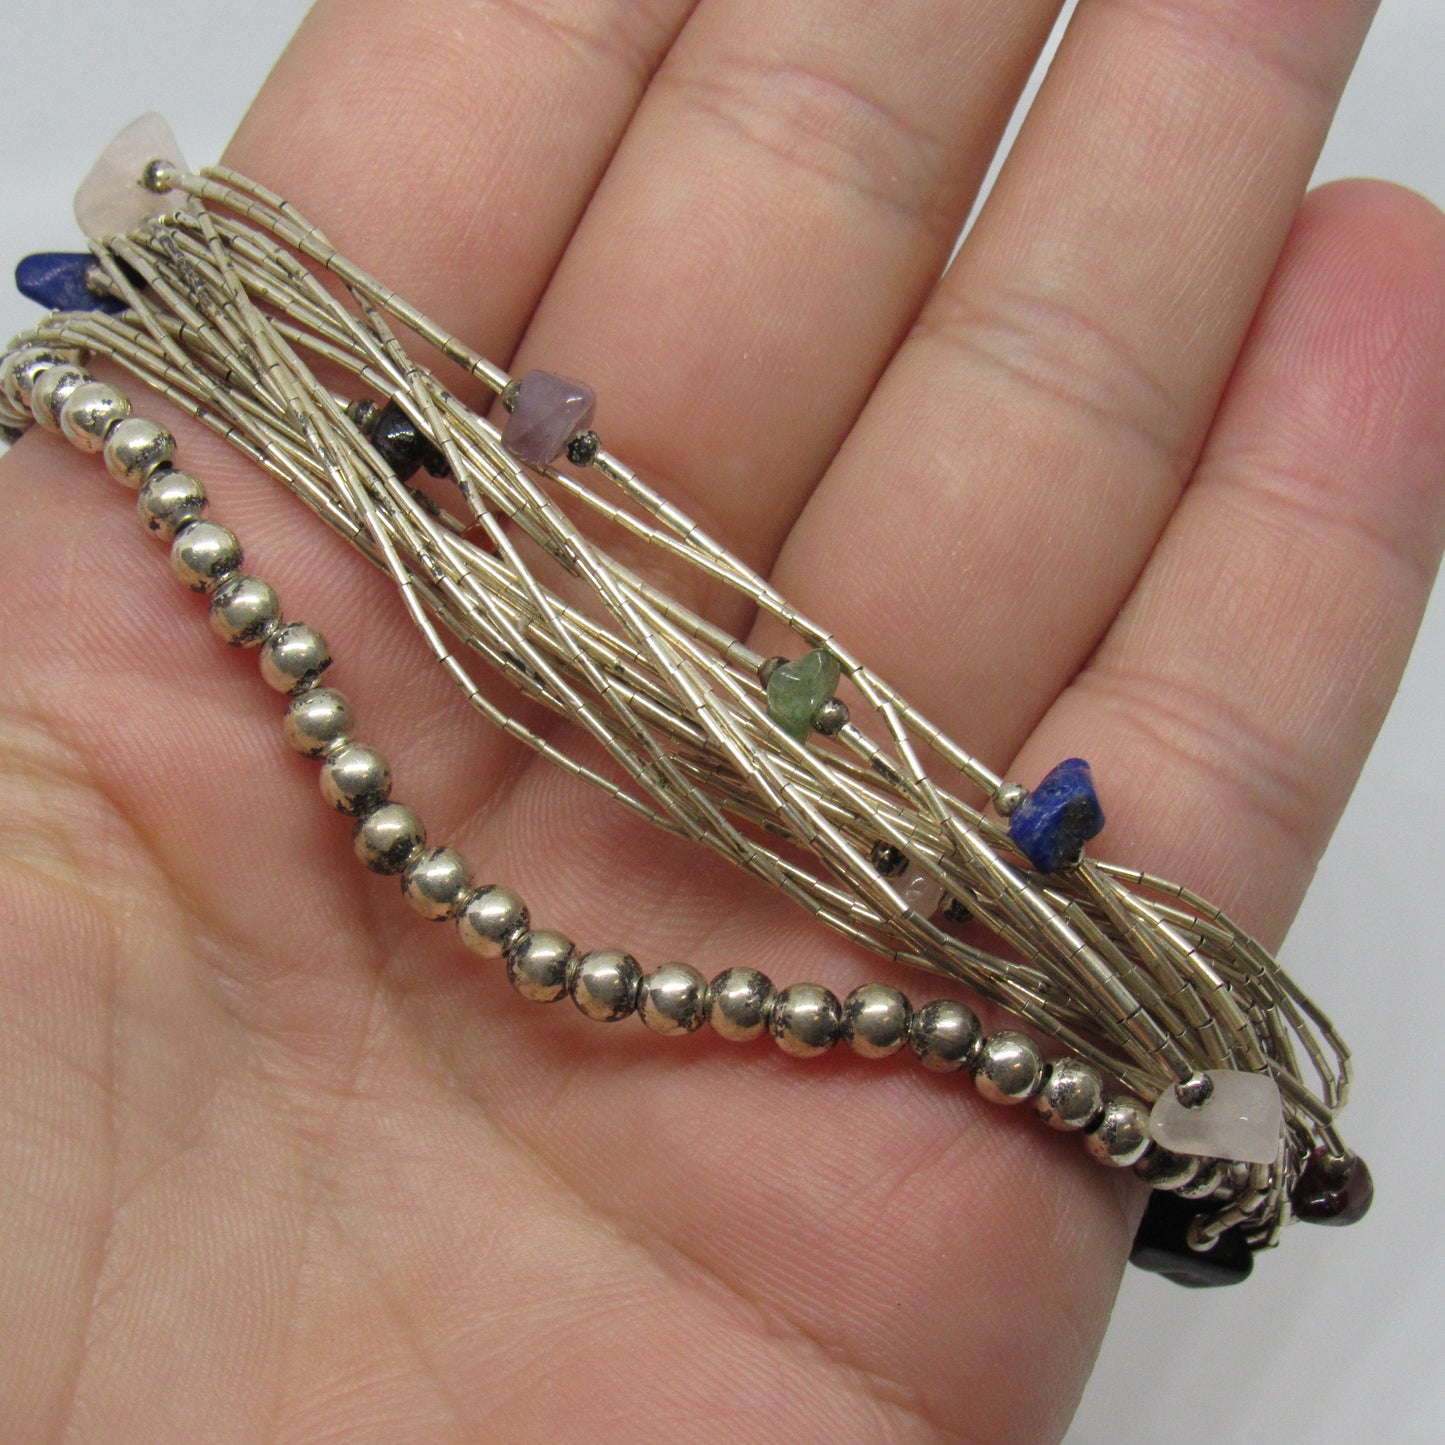 Sterling Silver Liquid Silver Bracelet w/ Beads & Stones - 8 inch